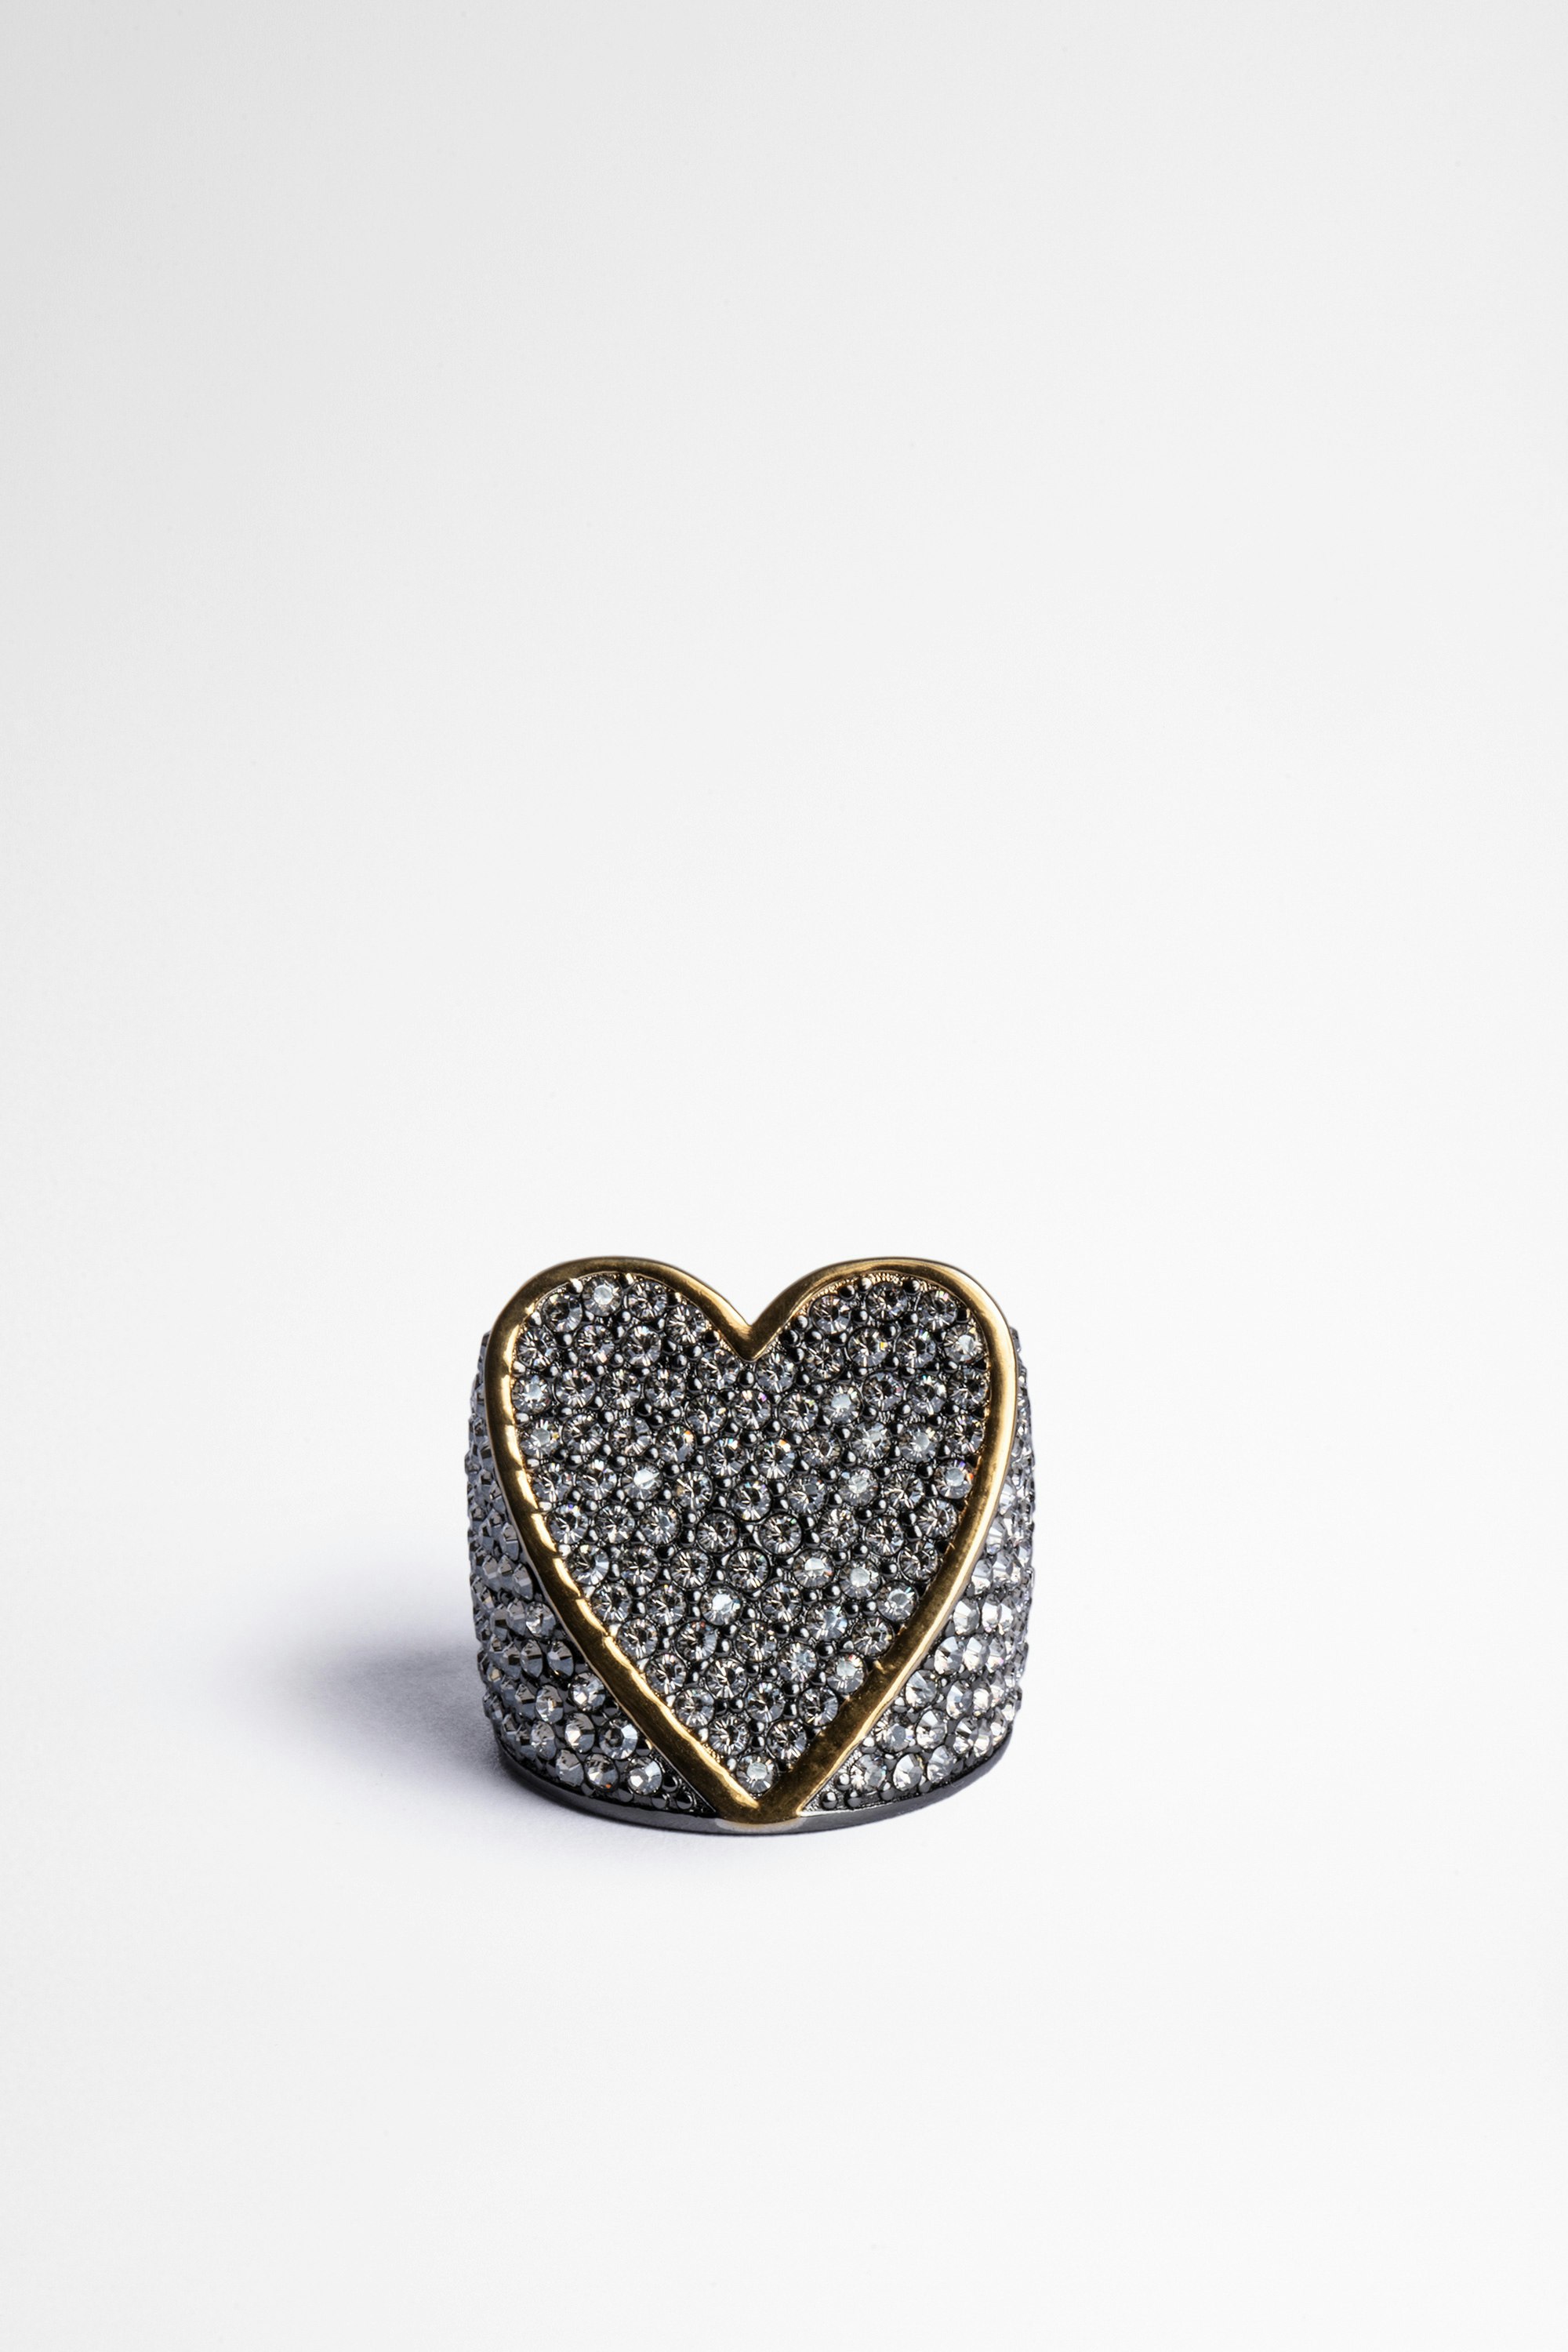 Idol Strass Ring Women's brass heart ring with rhinestones